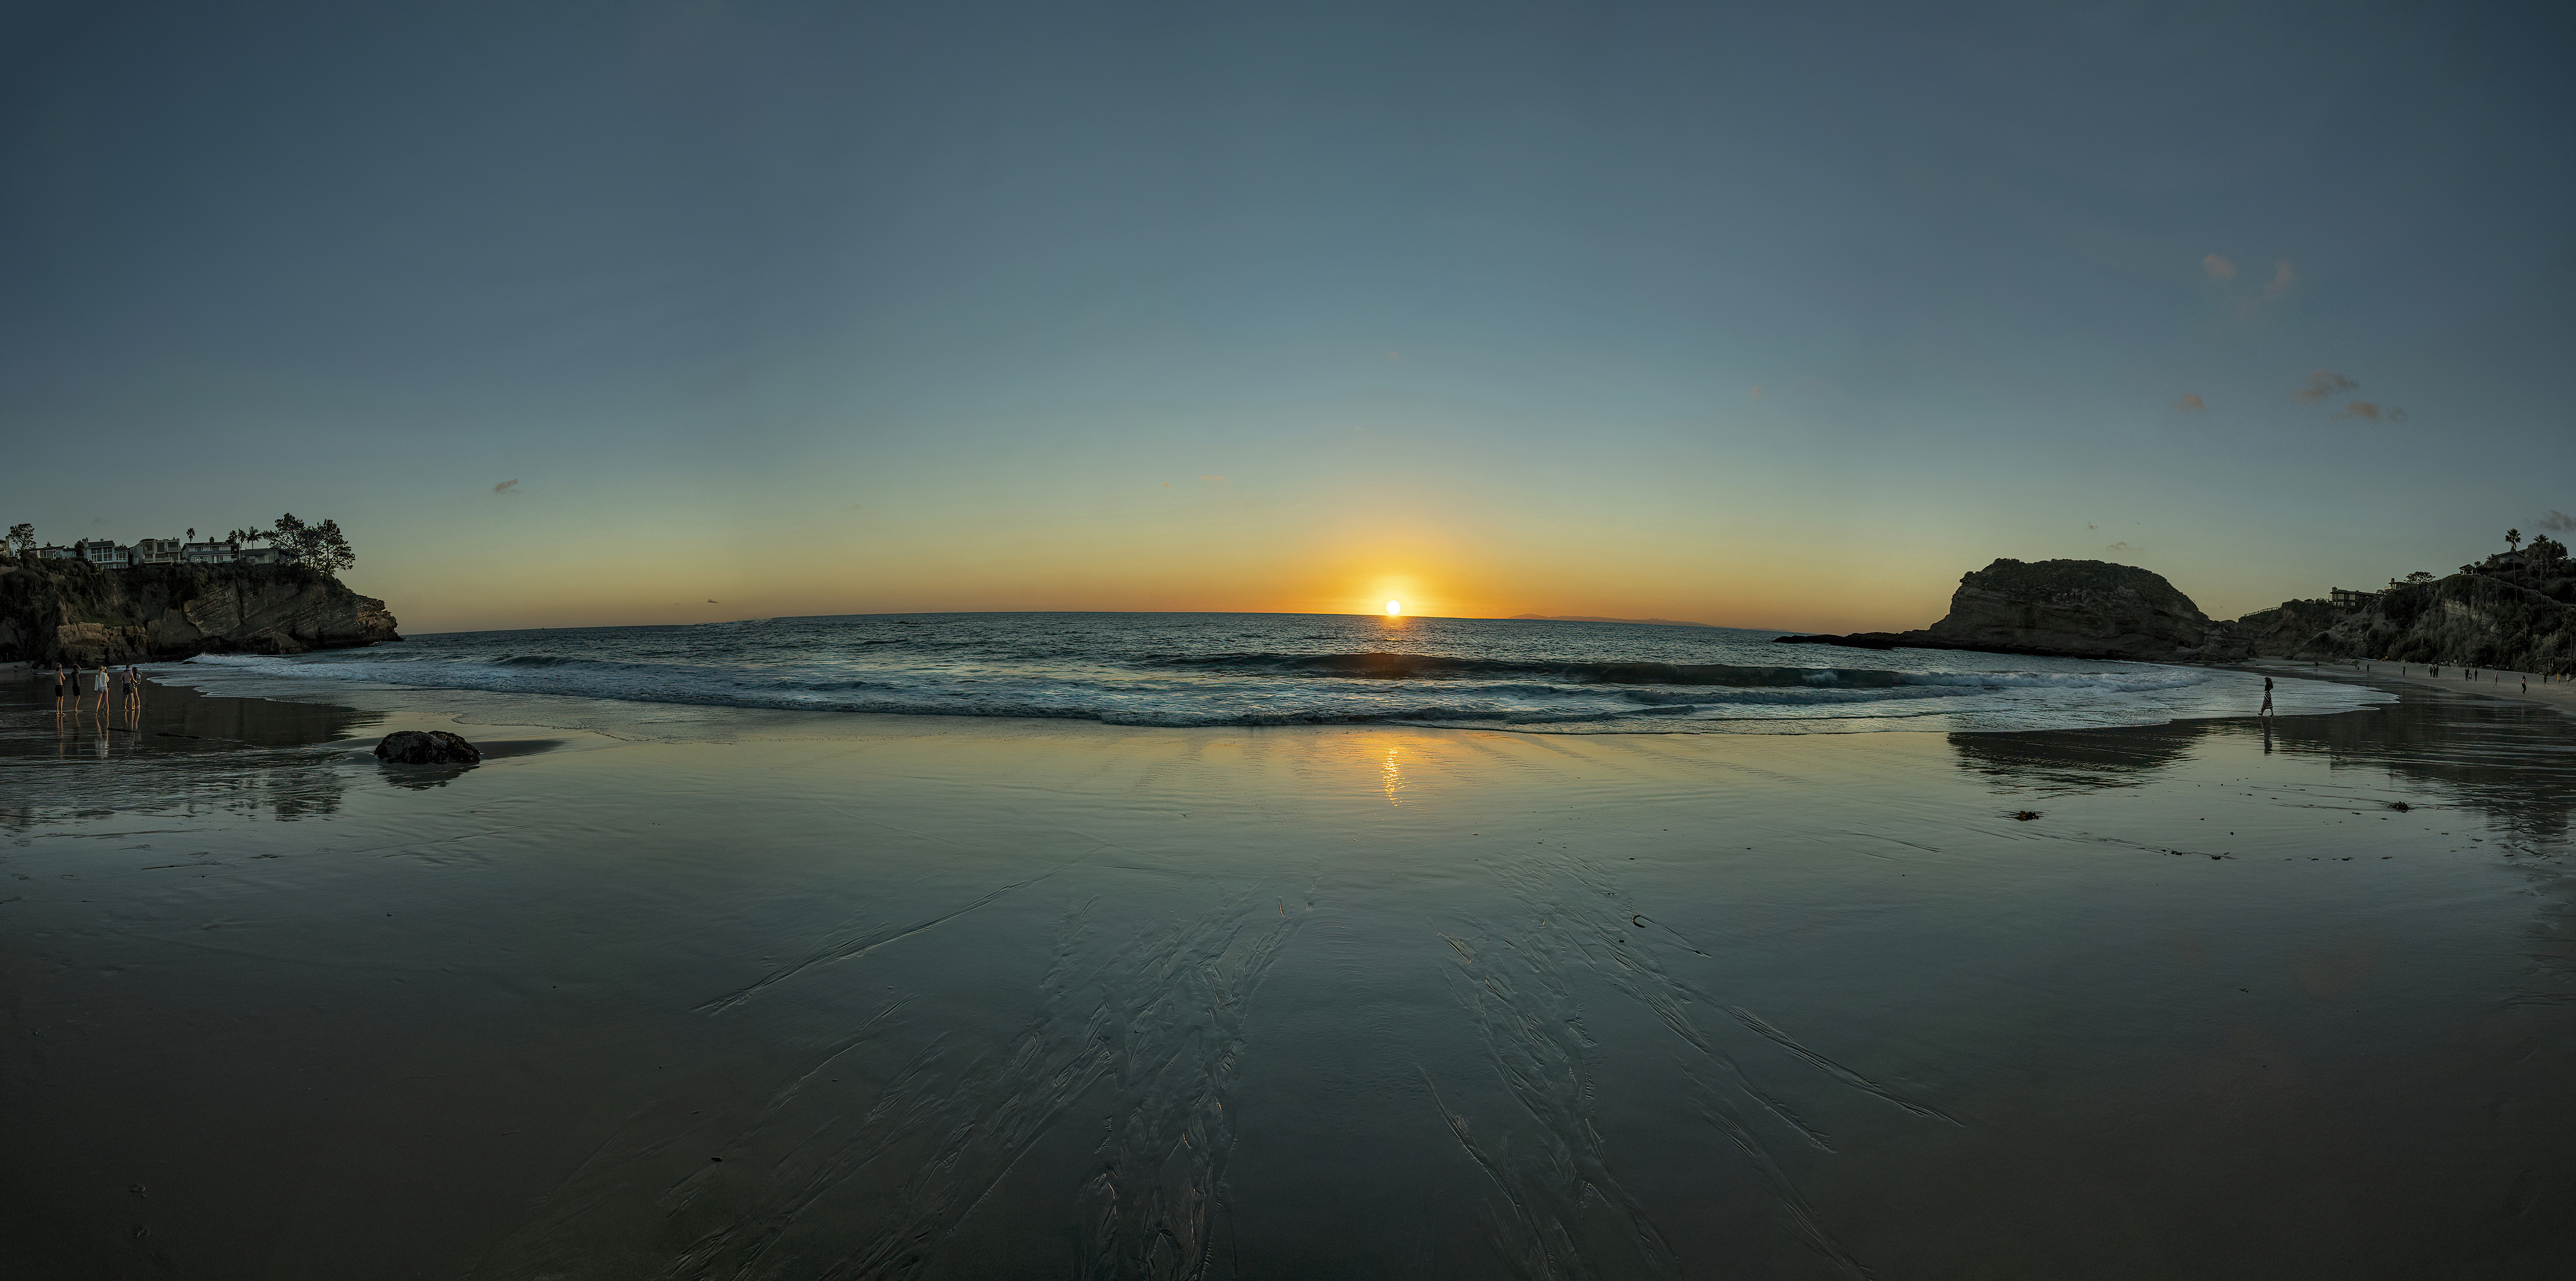 8-photo photomerge laguna beach sunset-DeNoiseAI-clear-DeNoiseAI-severe-noise